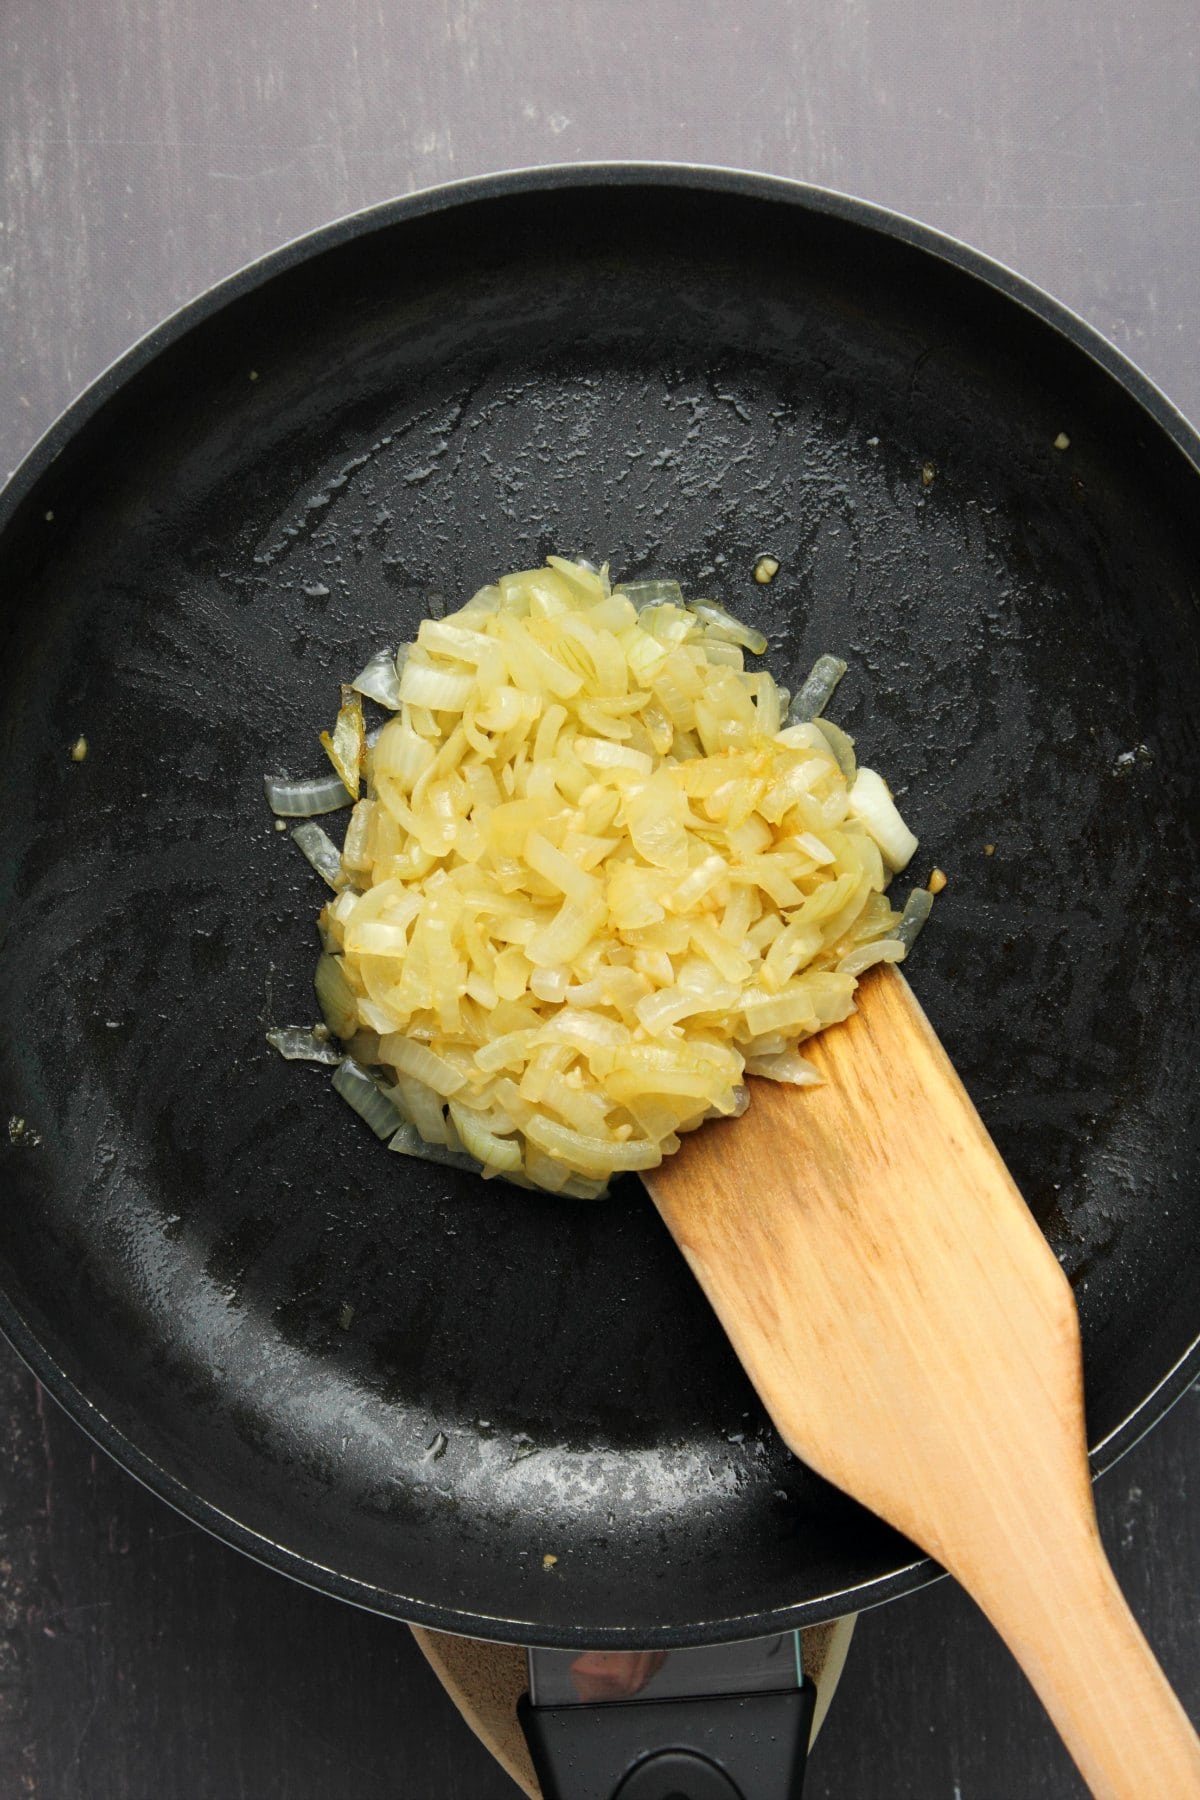 Sautéed onions in a frying pan.